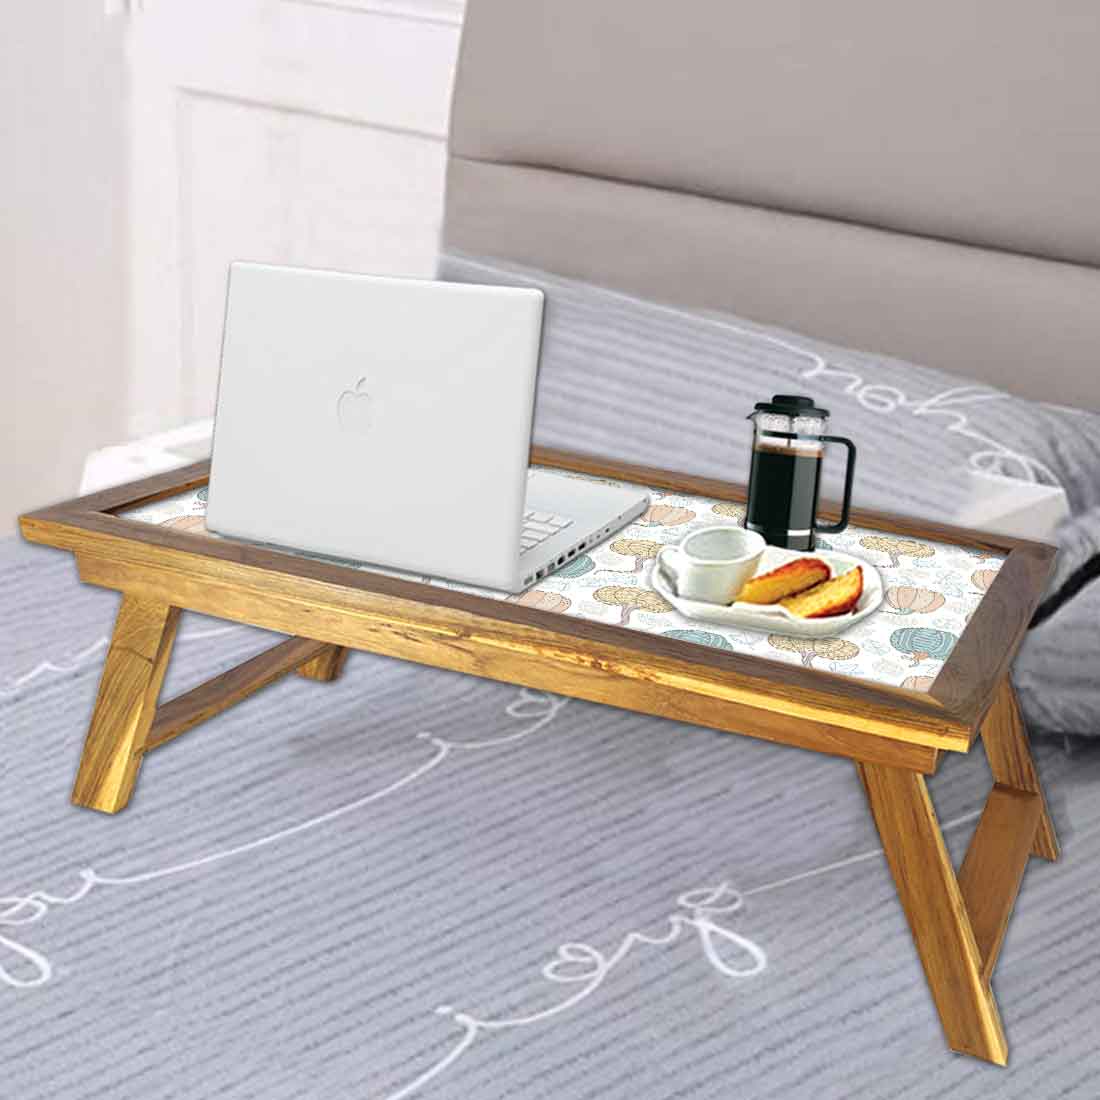 Nutcase Folding Laptop Table For Home Bed Lapdesk Breakfast Table Foldable Teak Wooden Study Desk - Pumpkin Nutcase